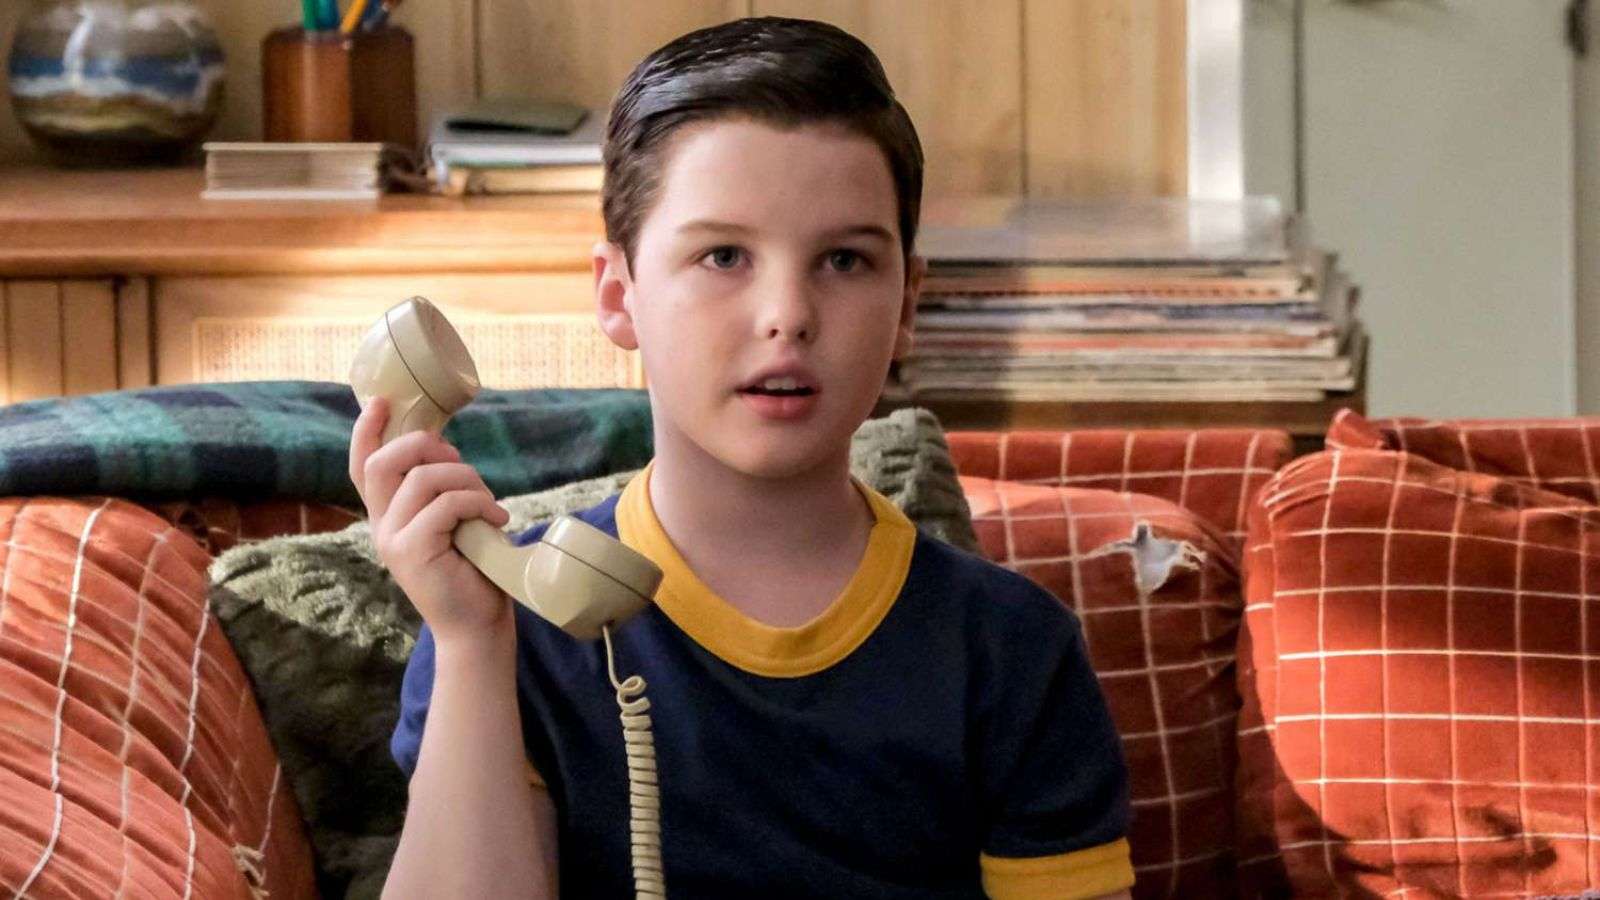 Sheldon holding a phone in Young Sheldon